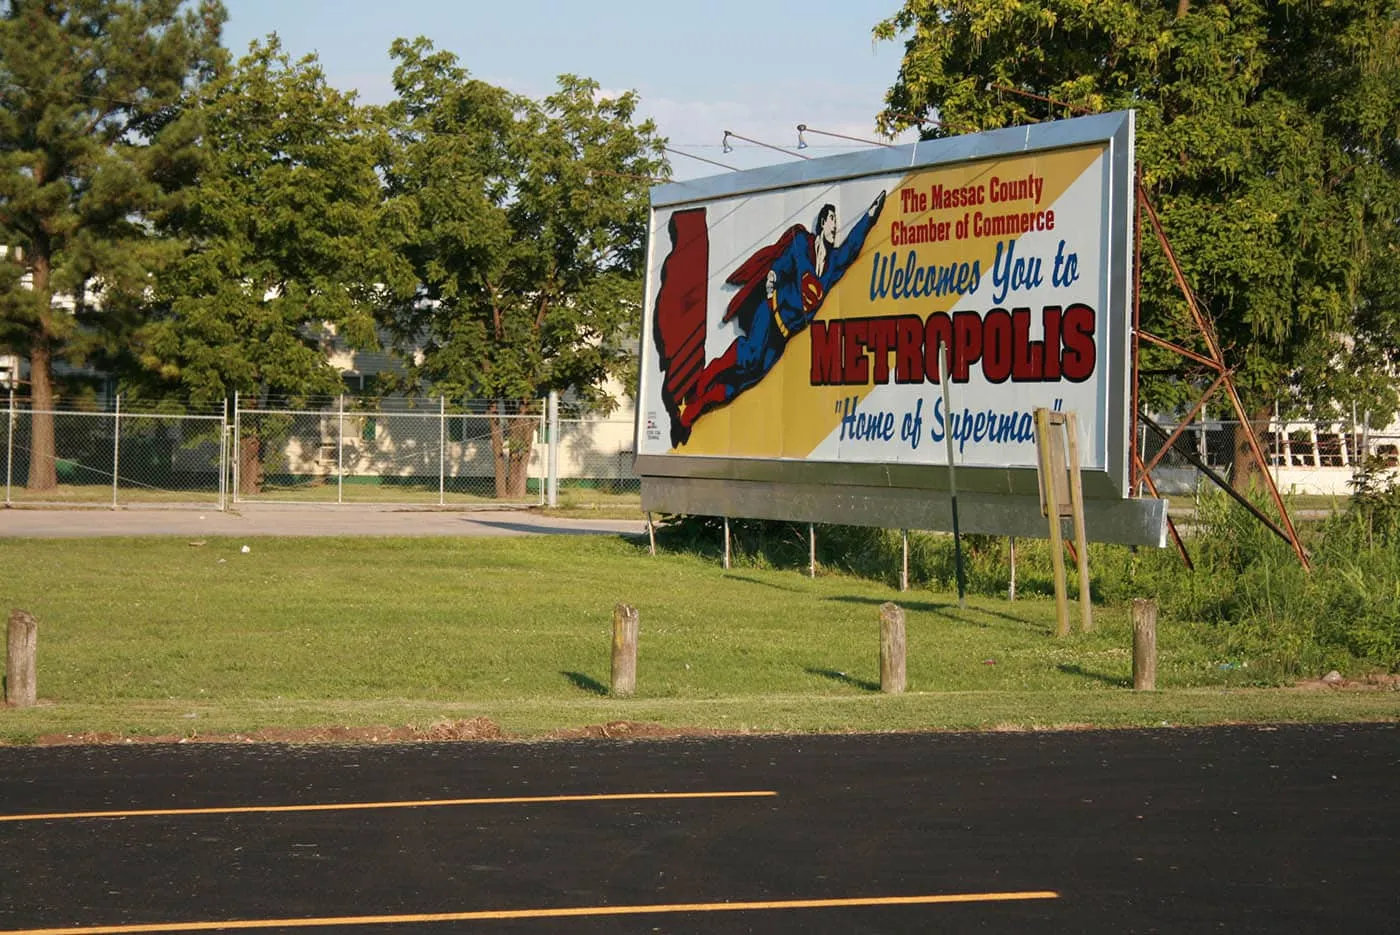 Welcome sign: Metropolis, Illinois: Home of Superman